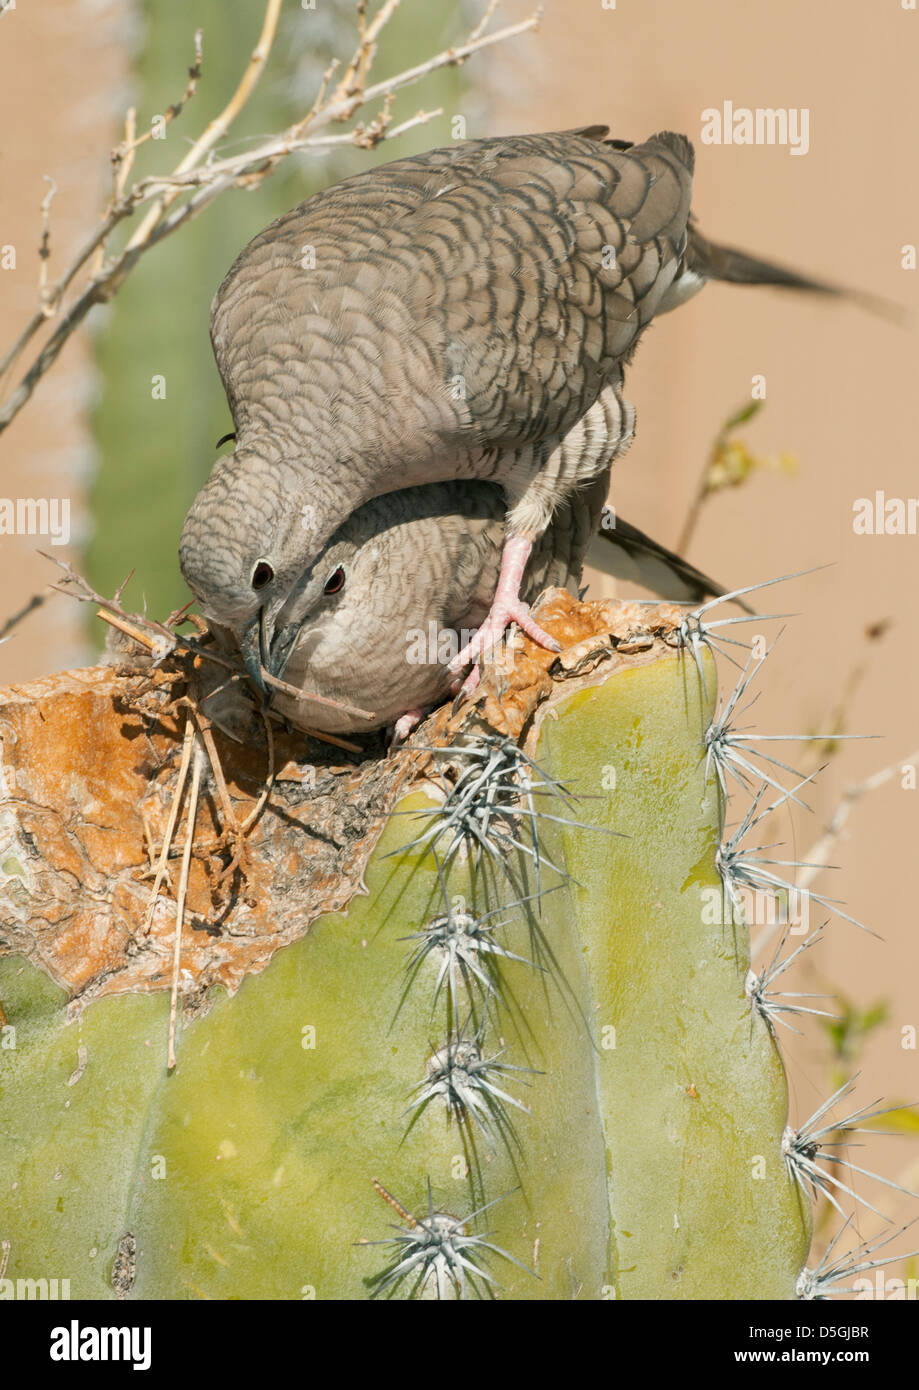 Inca-Taube (Columbina Inka) paar Nestbau auf Kaktus, Tucson, Arizona  Stockfotografie - Alamy